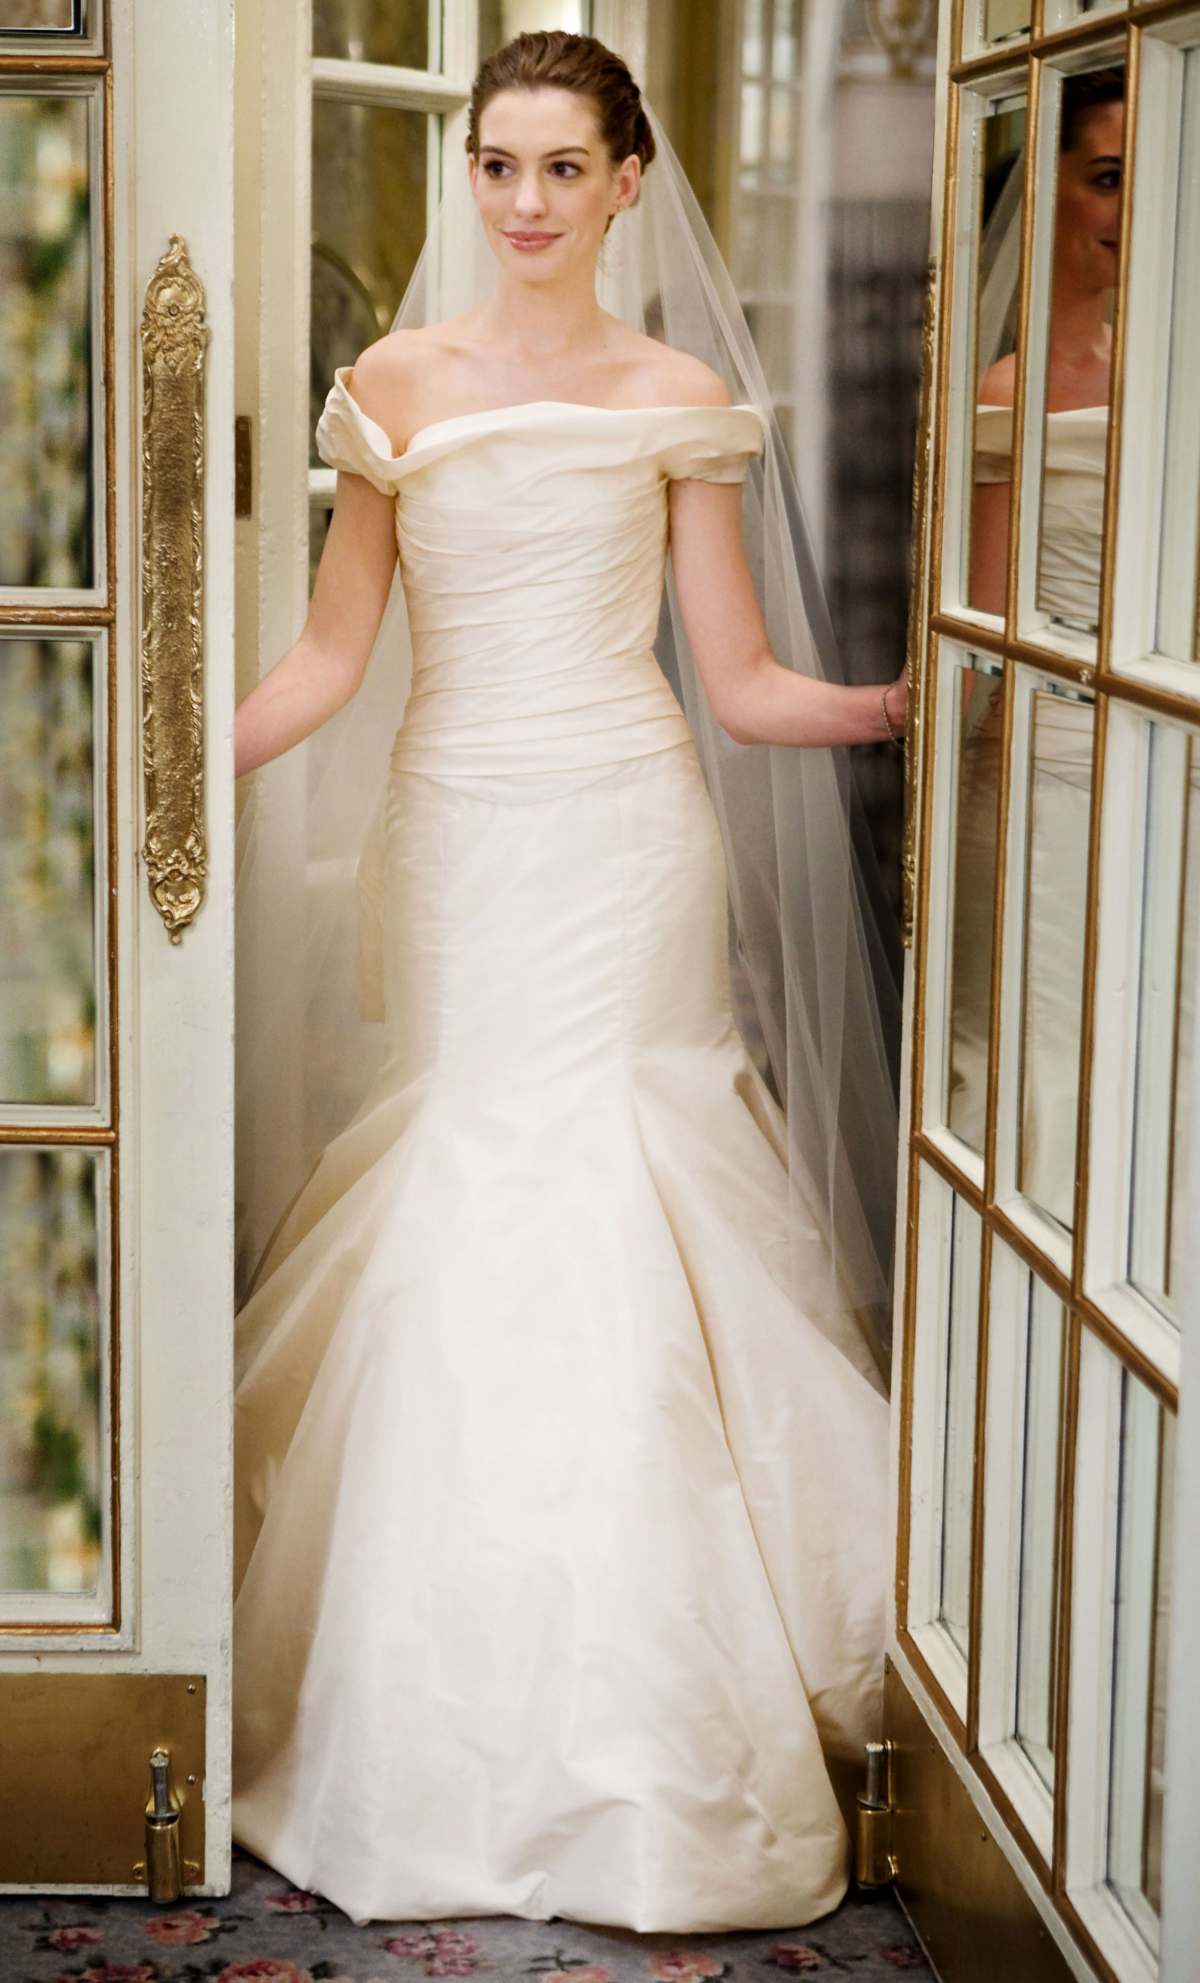 Best Celebrity Wedding Dresses - Celeb Bridal Style